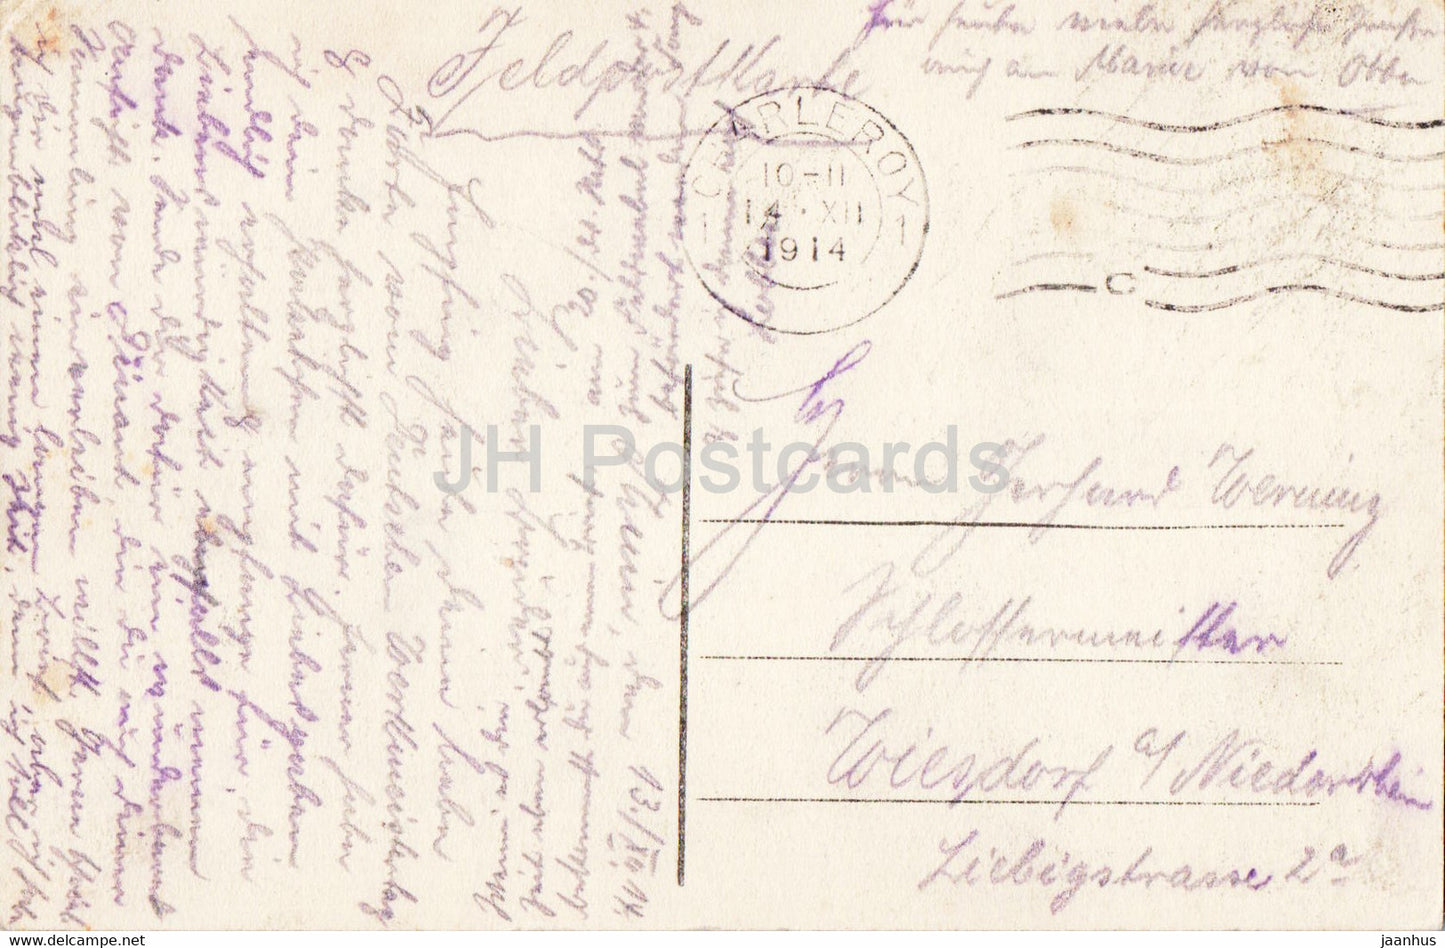 Dinant - Panorama - 9 - old postcard - 1914 - Belgium - used